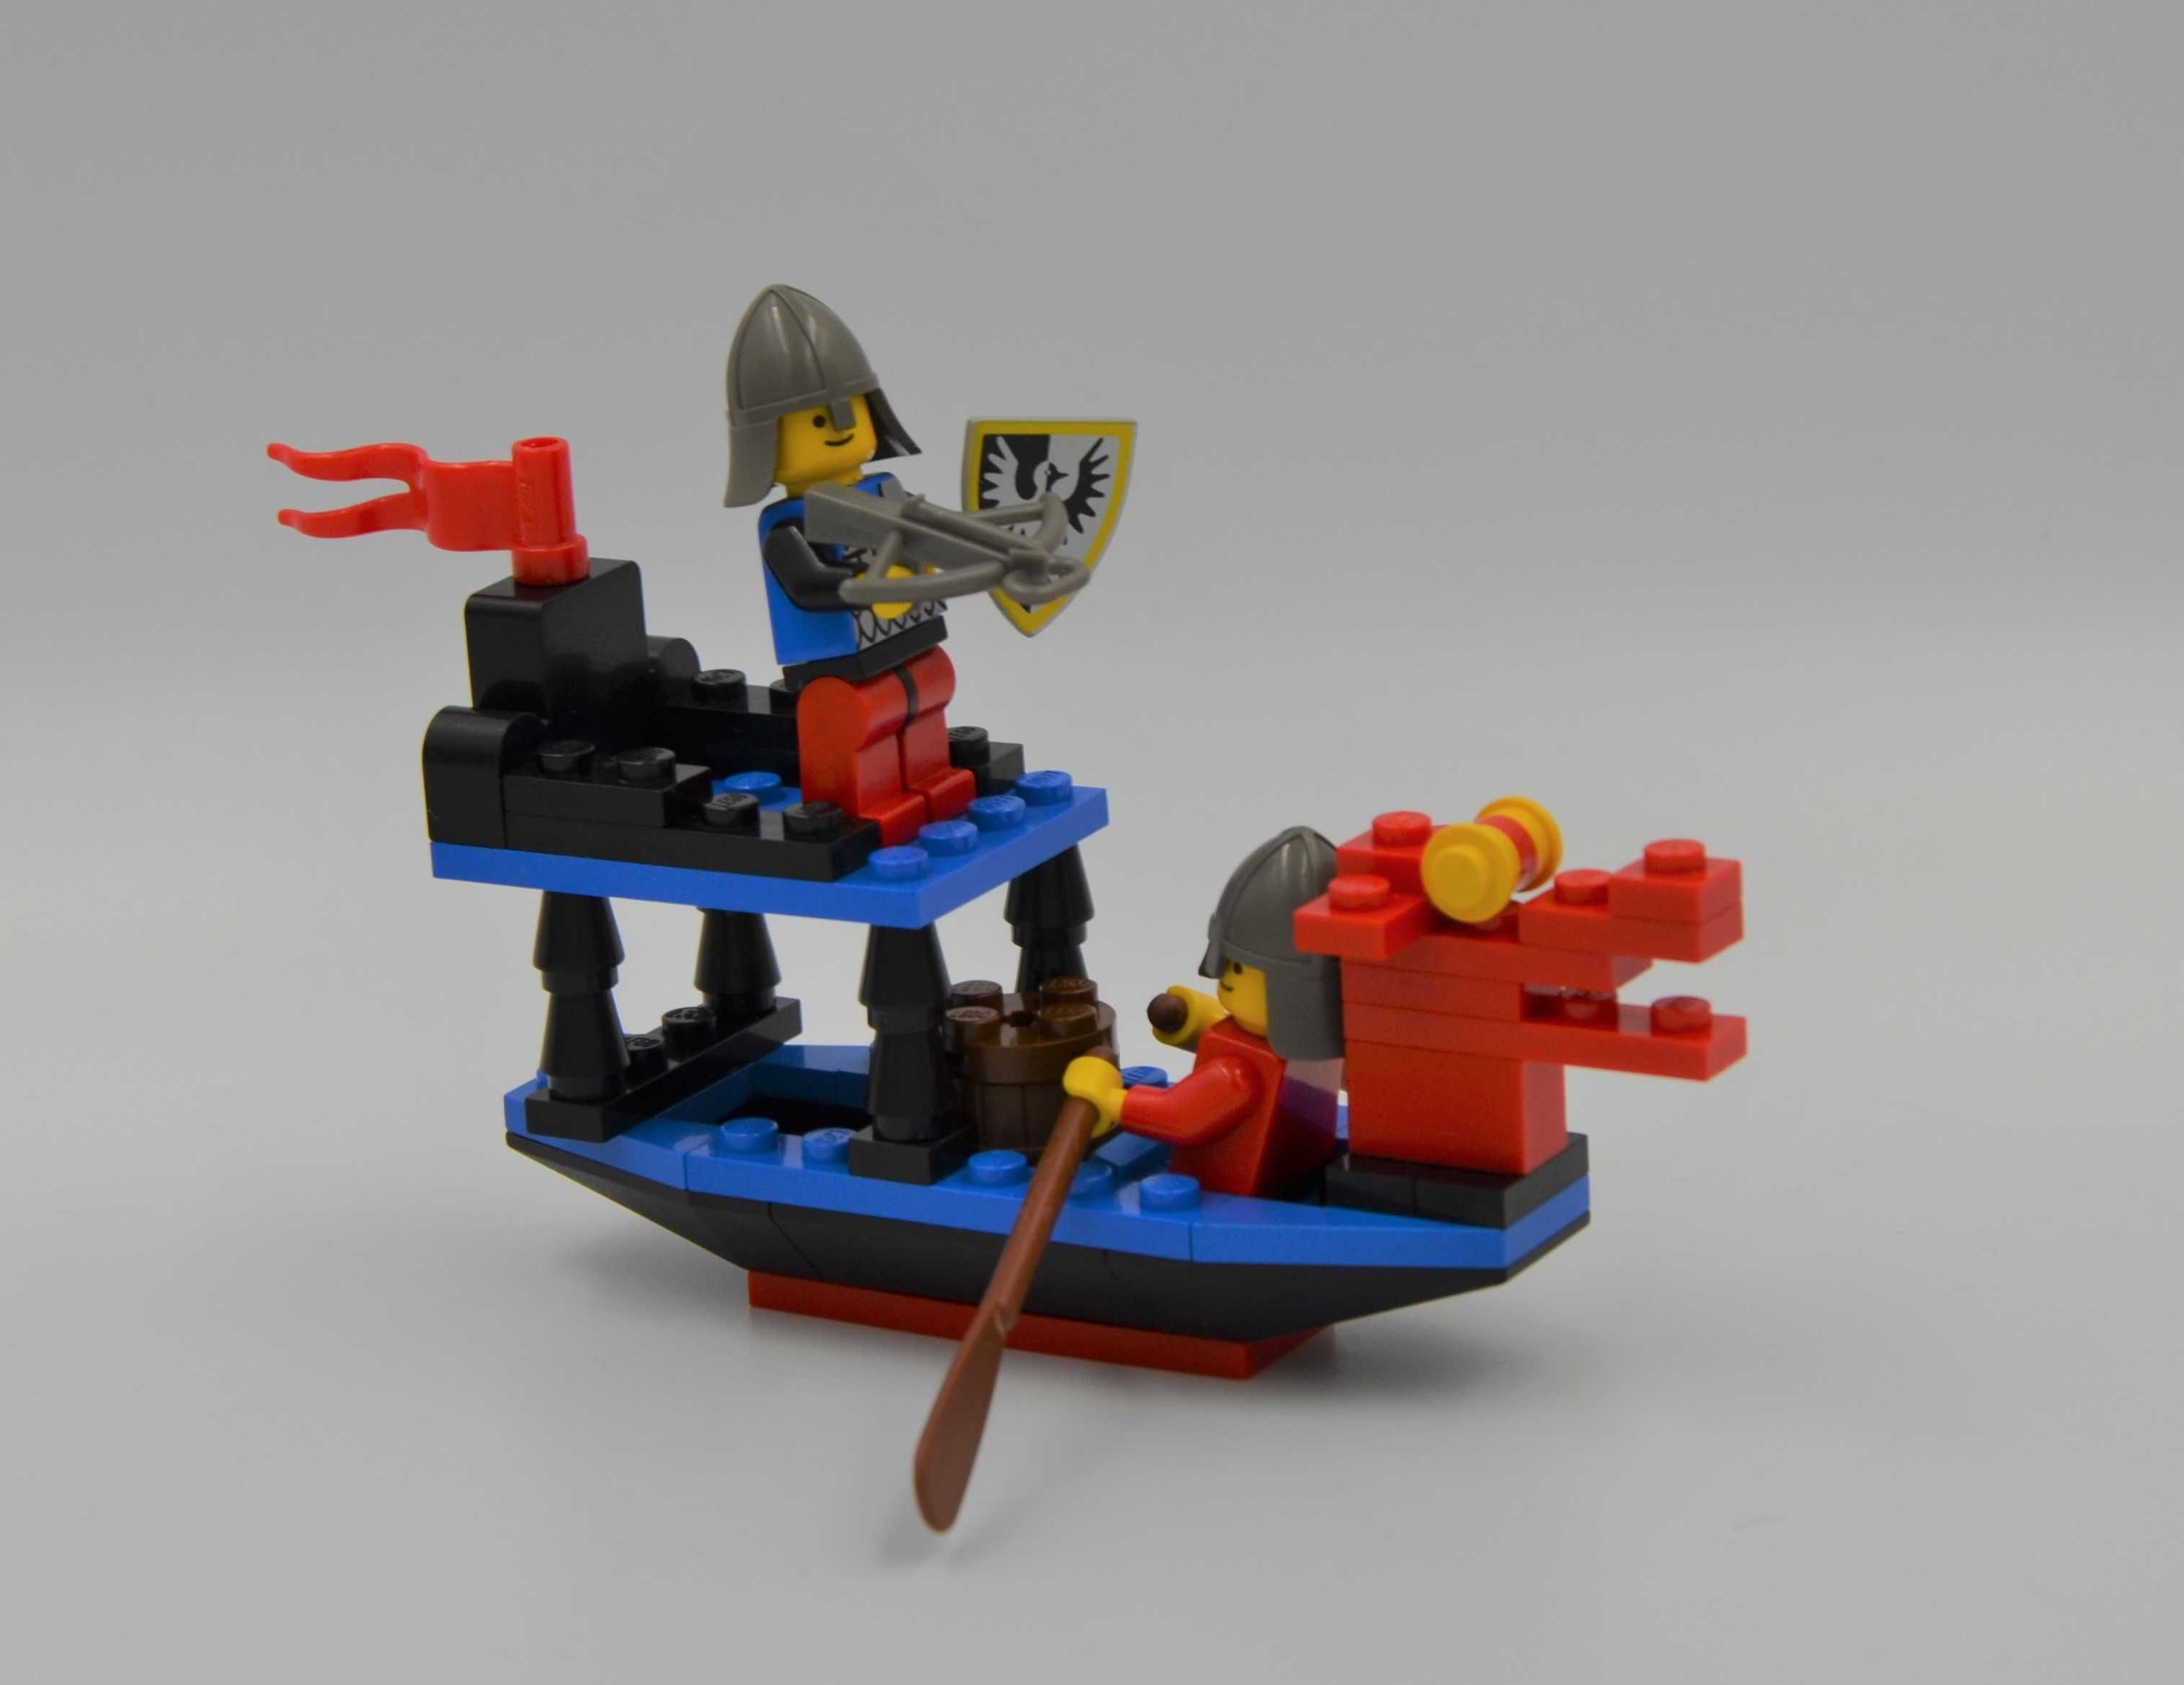 Lego 6018 – Battle Dragon (Castle) - Kompletny!